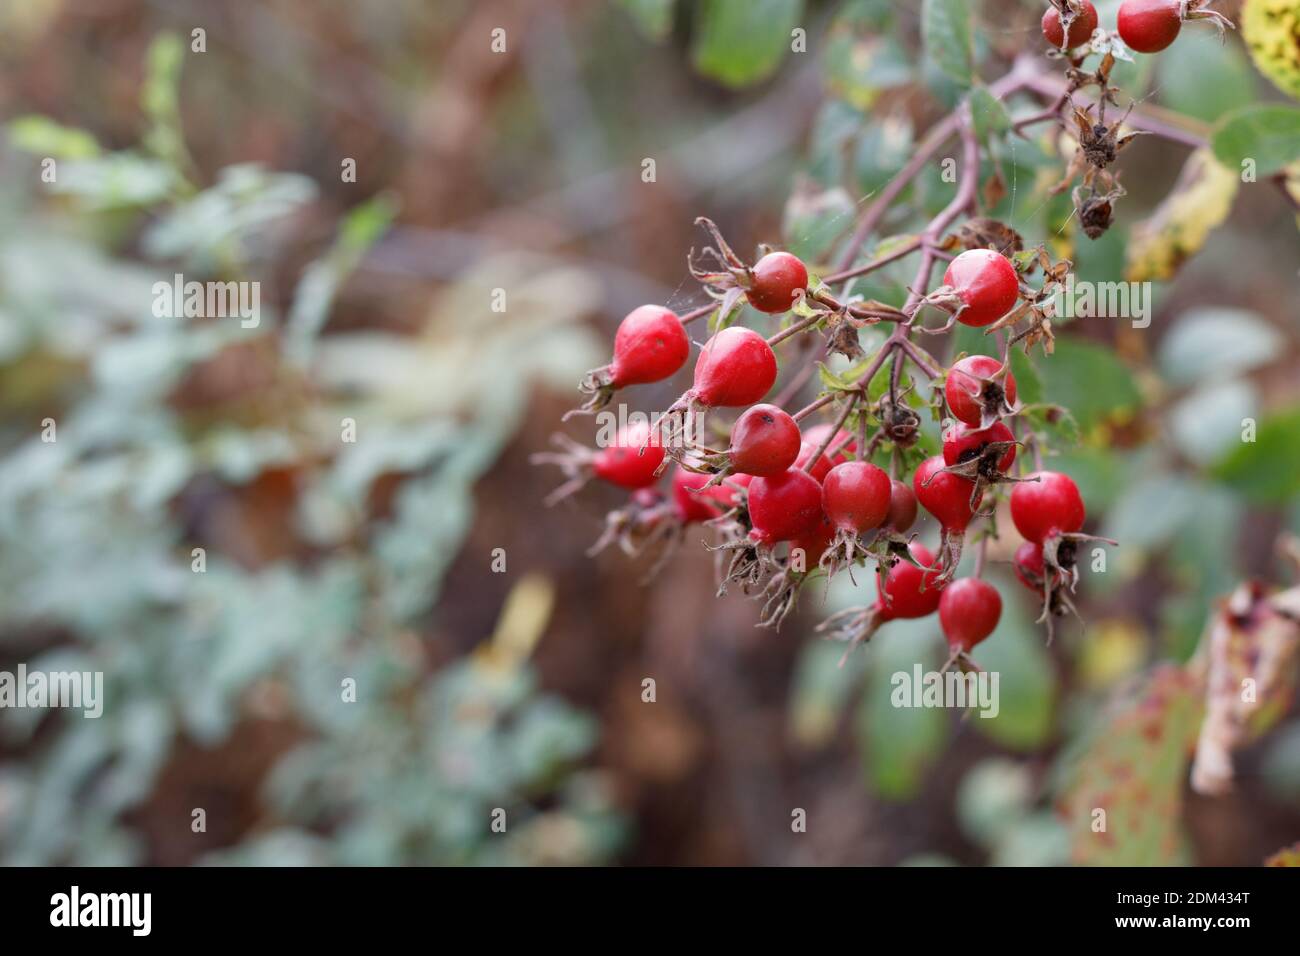 Red accessory achene fruit, California Rose, Rosa Californica, Rosaceae, native shrub, Ballona Freshwater Marsh, Southern California Coast, Autumn. Stock Photo